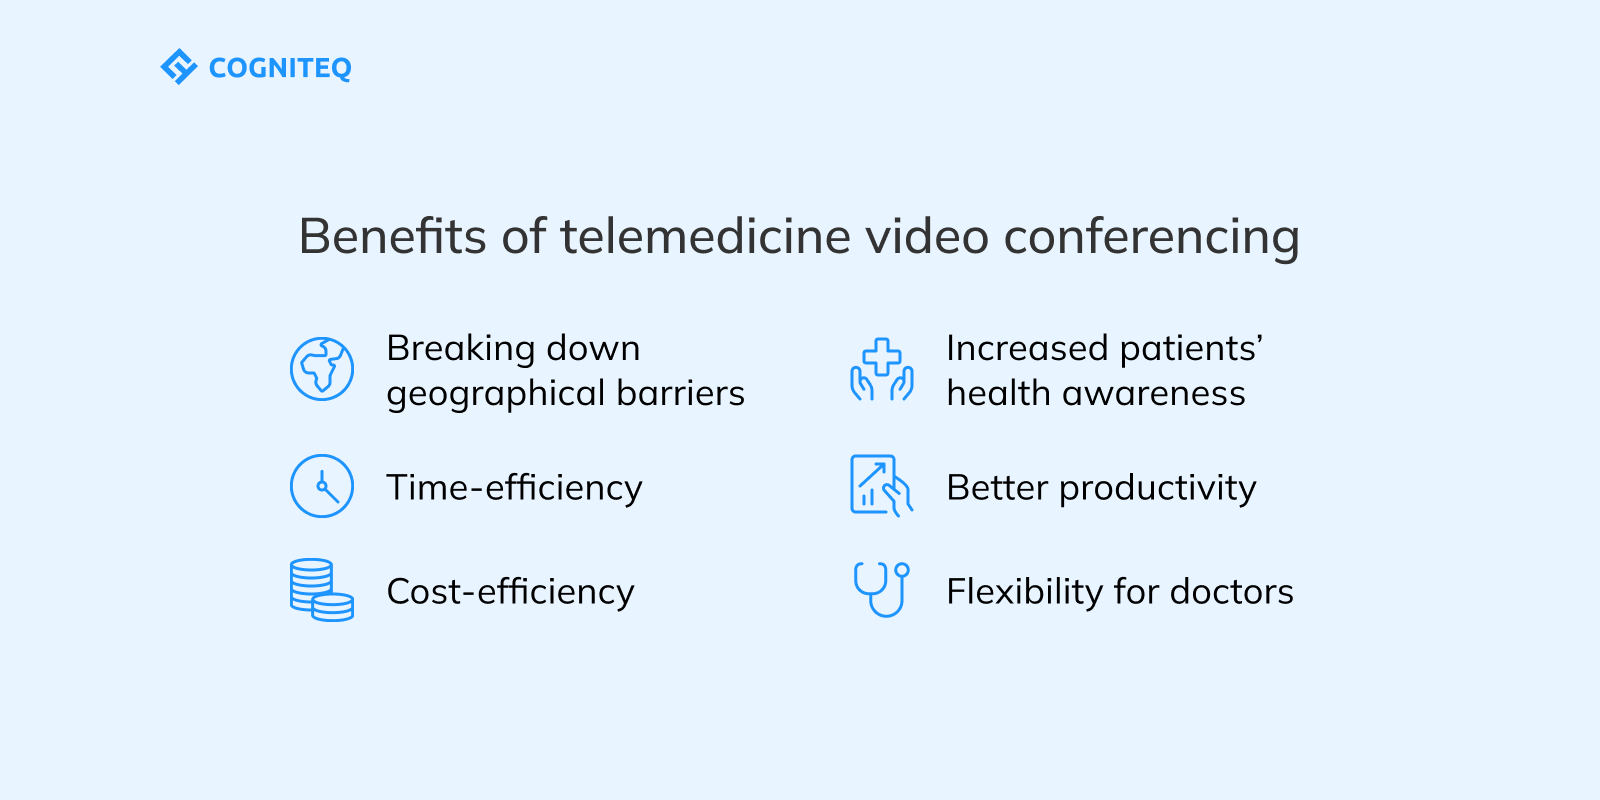 Benefits of telemedicine video conferencing